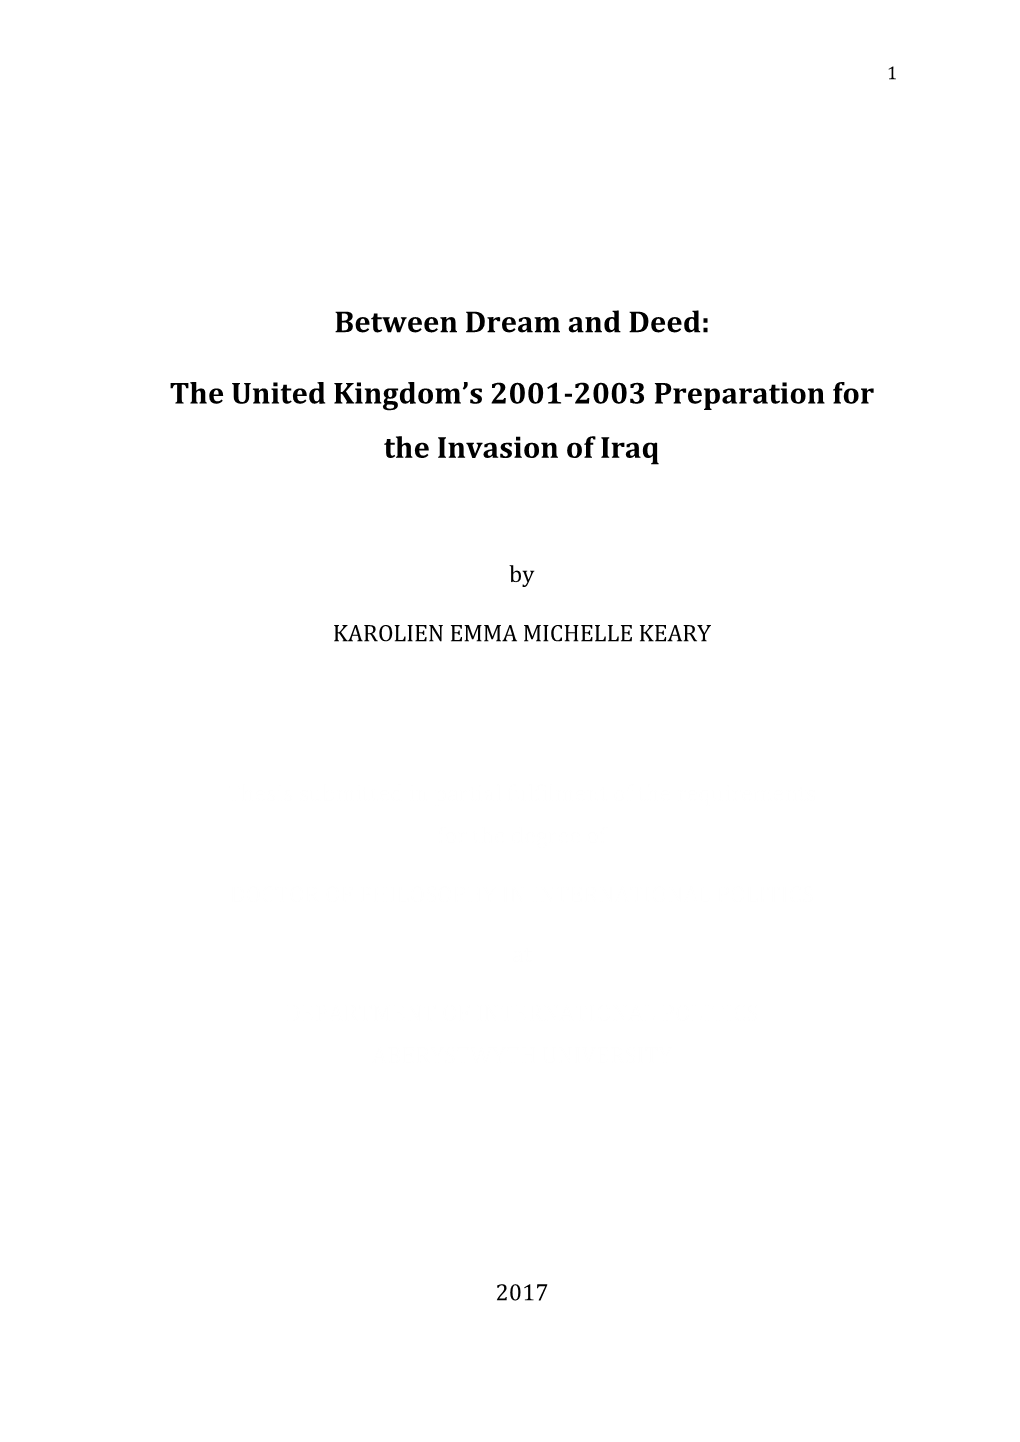 The United Kingdom's 2001-2003 Preparation for the Invasion of Iraq